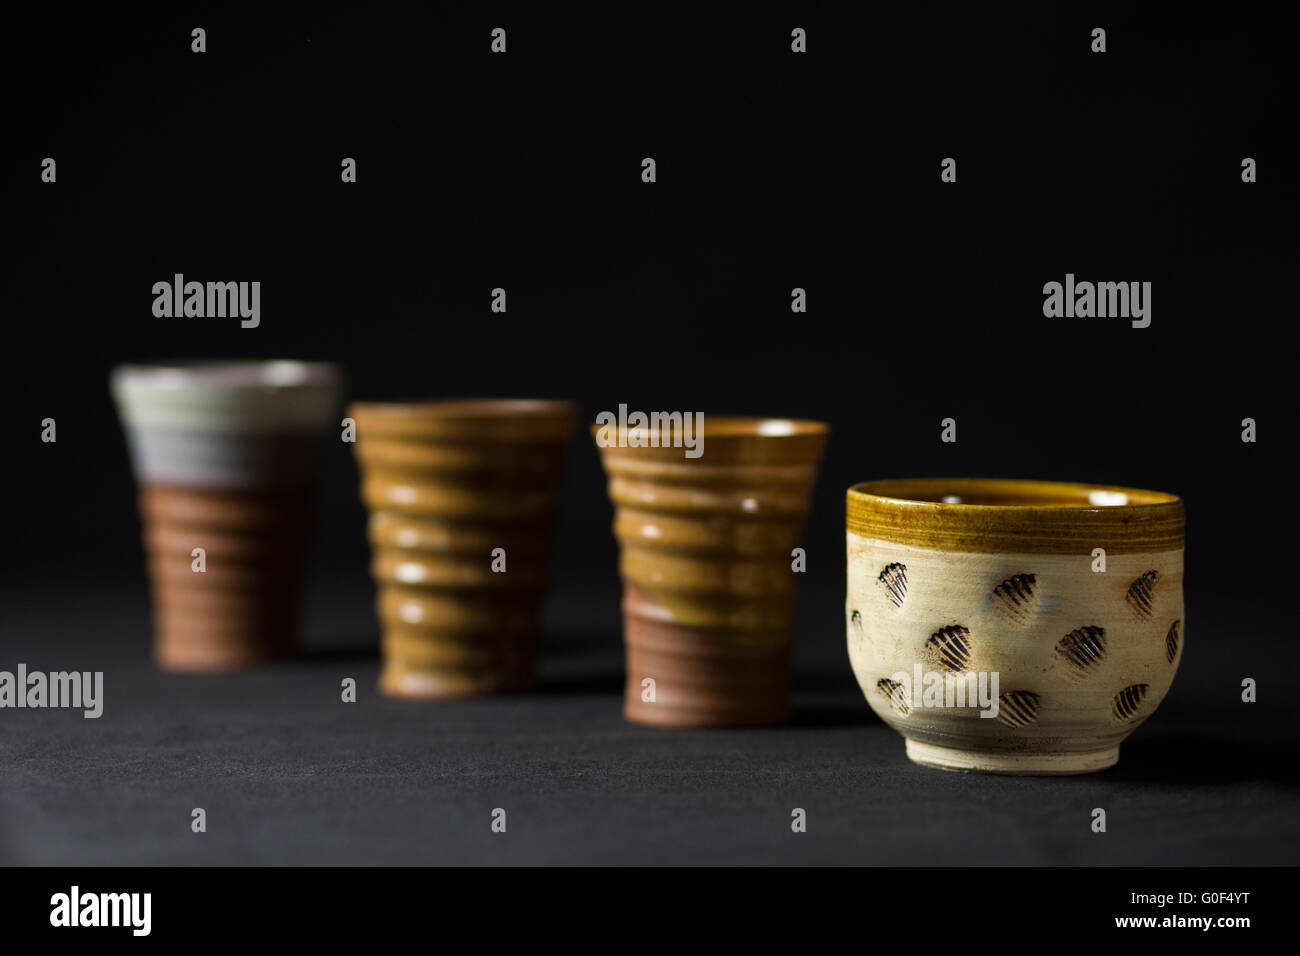 Ceramic cups in series Stock Photo